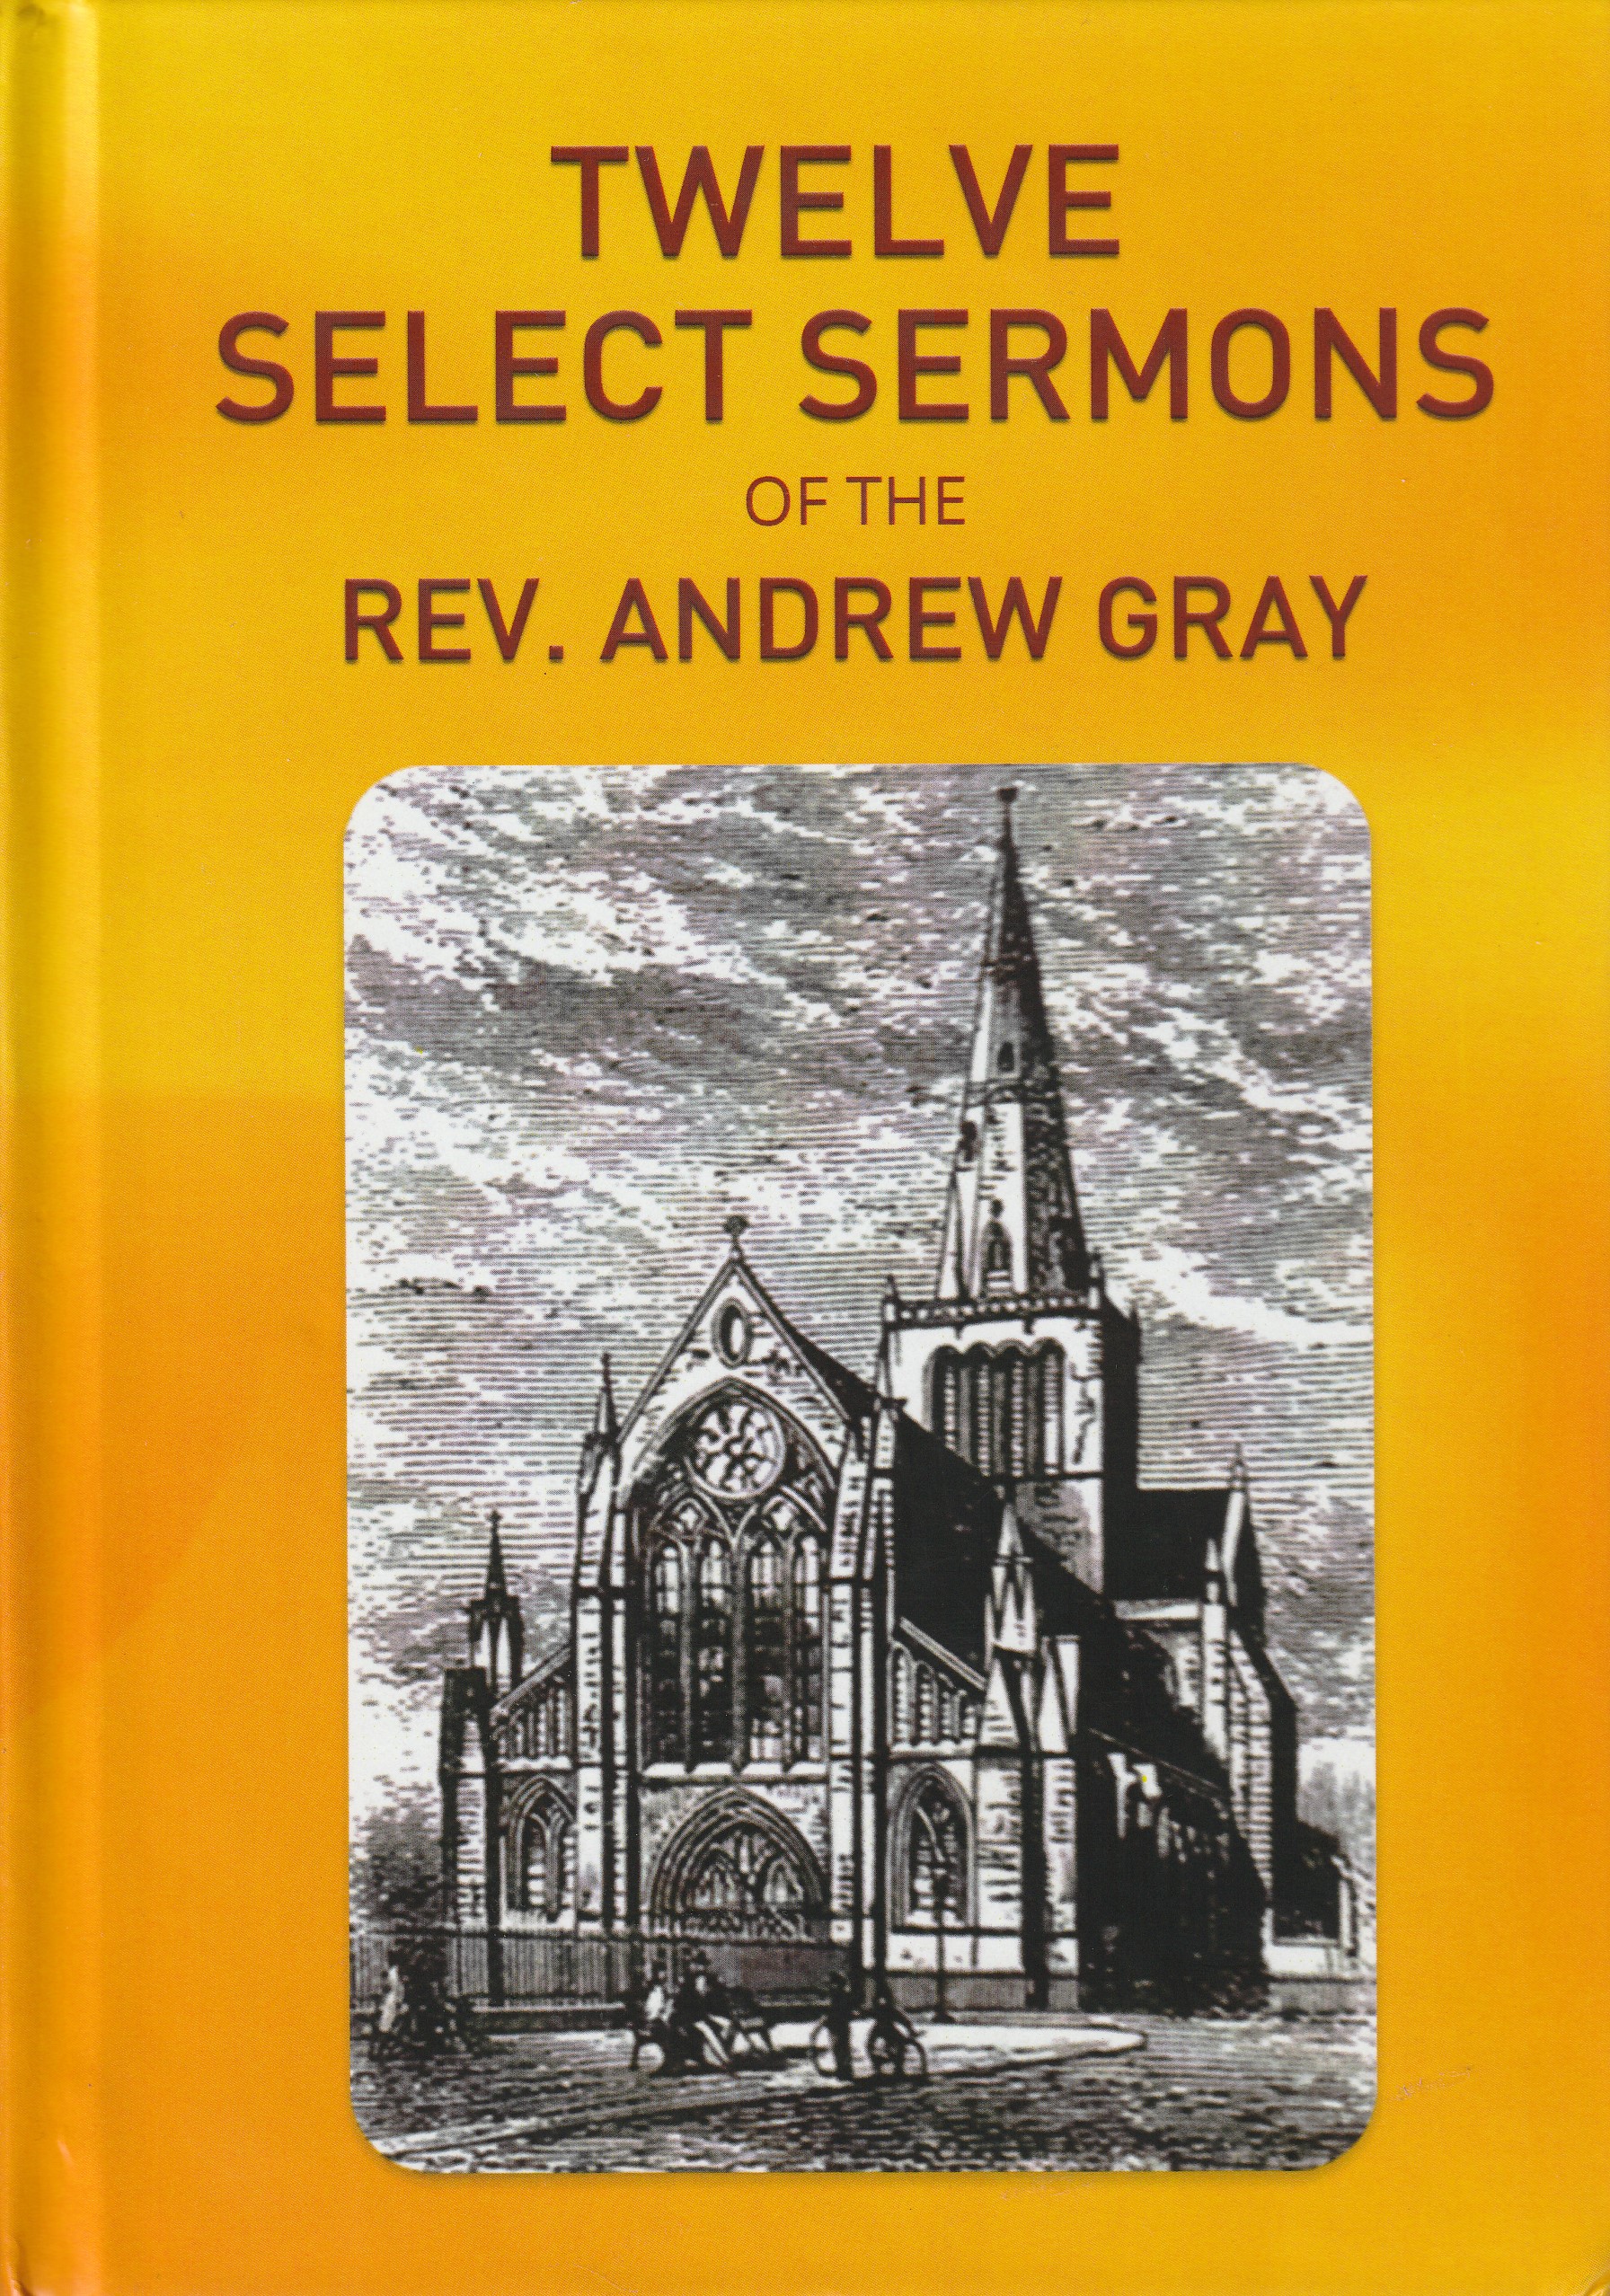 Westminster Standard Publications Vol. 2: Twelve Sermons of the Rev. Andrew Gray